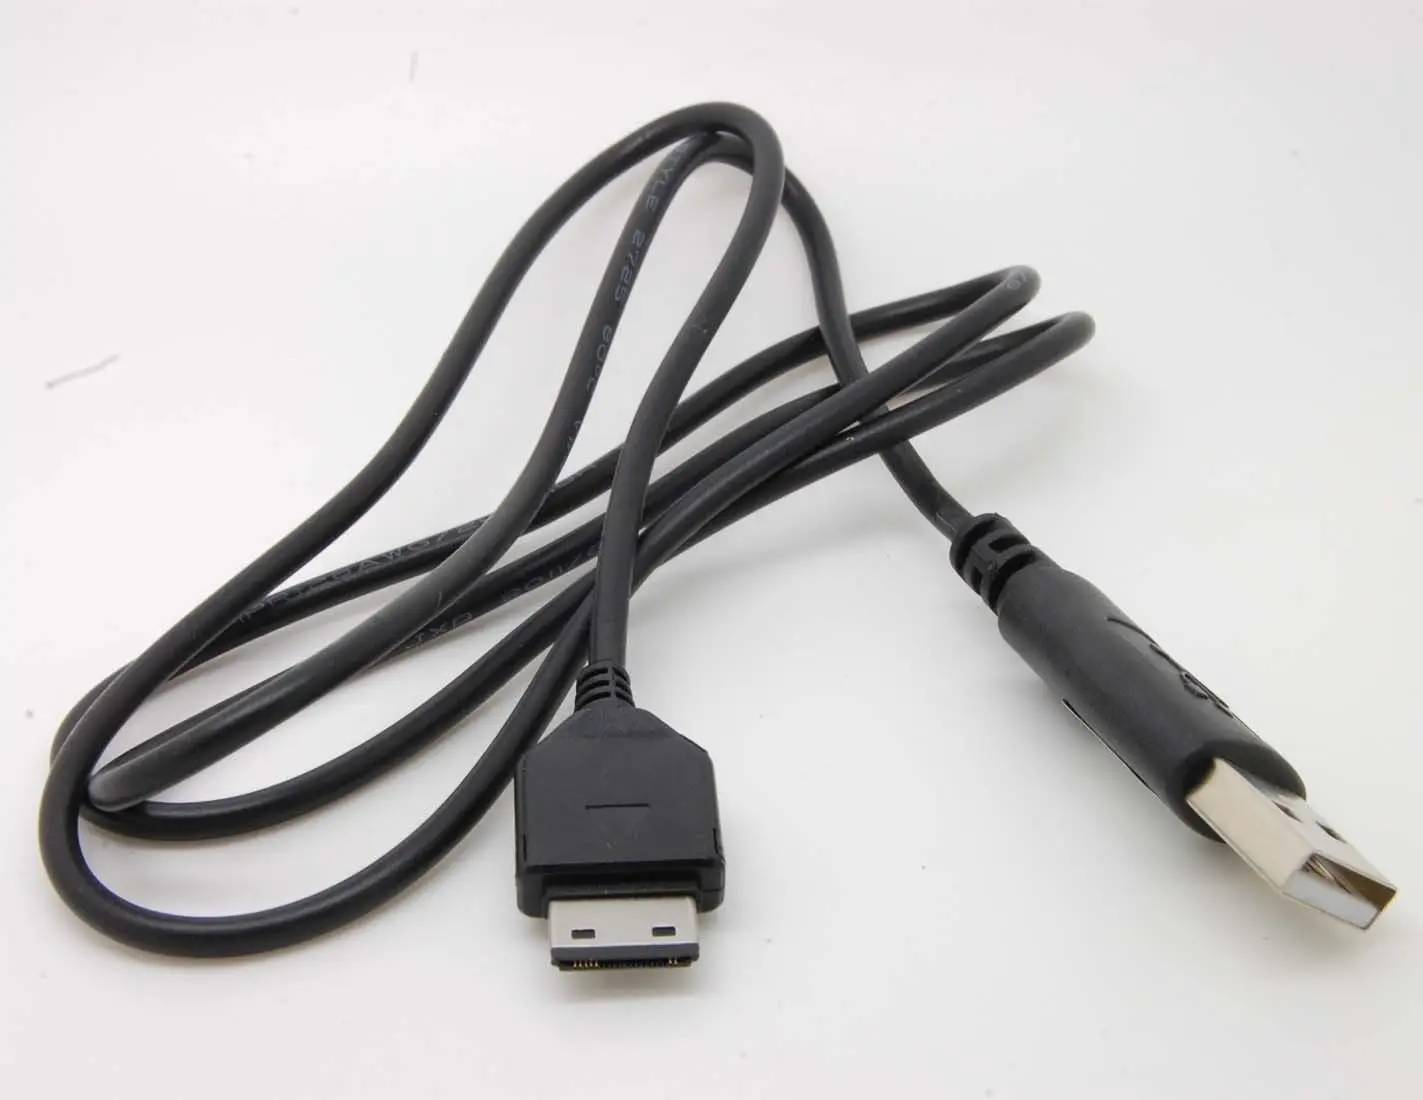 

USB data &charger cable for SAMSUNG SGH-A877 A887 F200 F210 F400 F480 F490 F700 G600 G800 i450 i617 i627 i637 i640 i788 i900